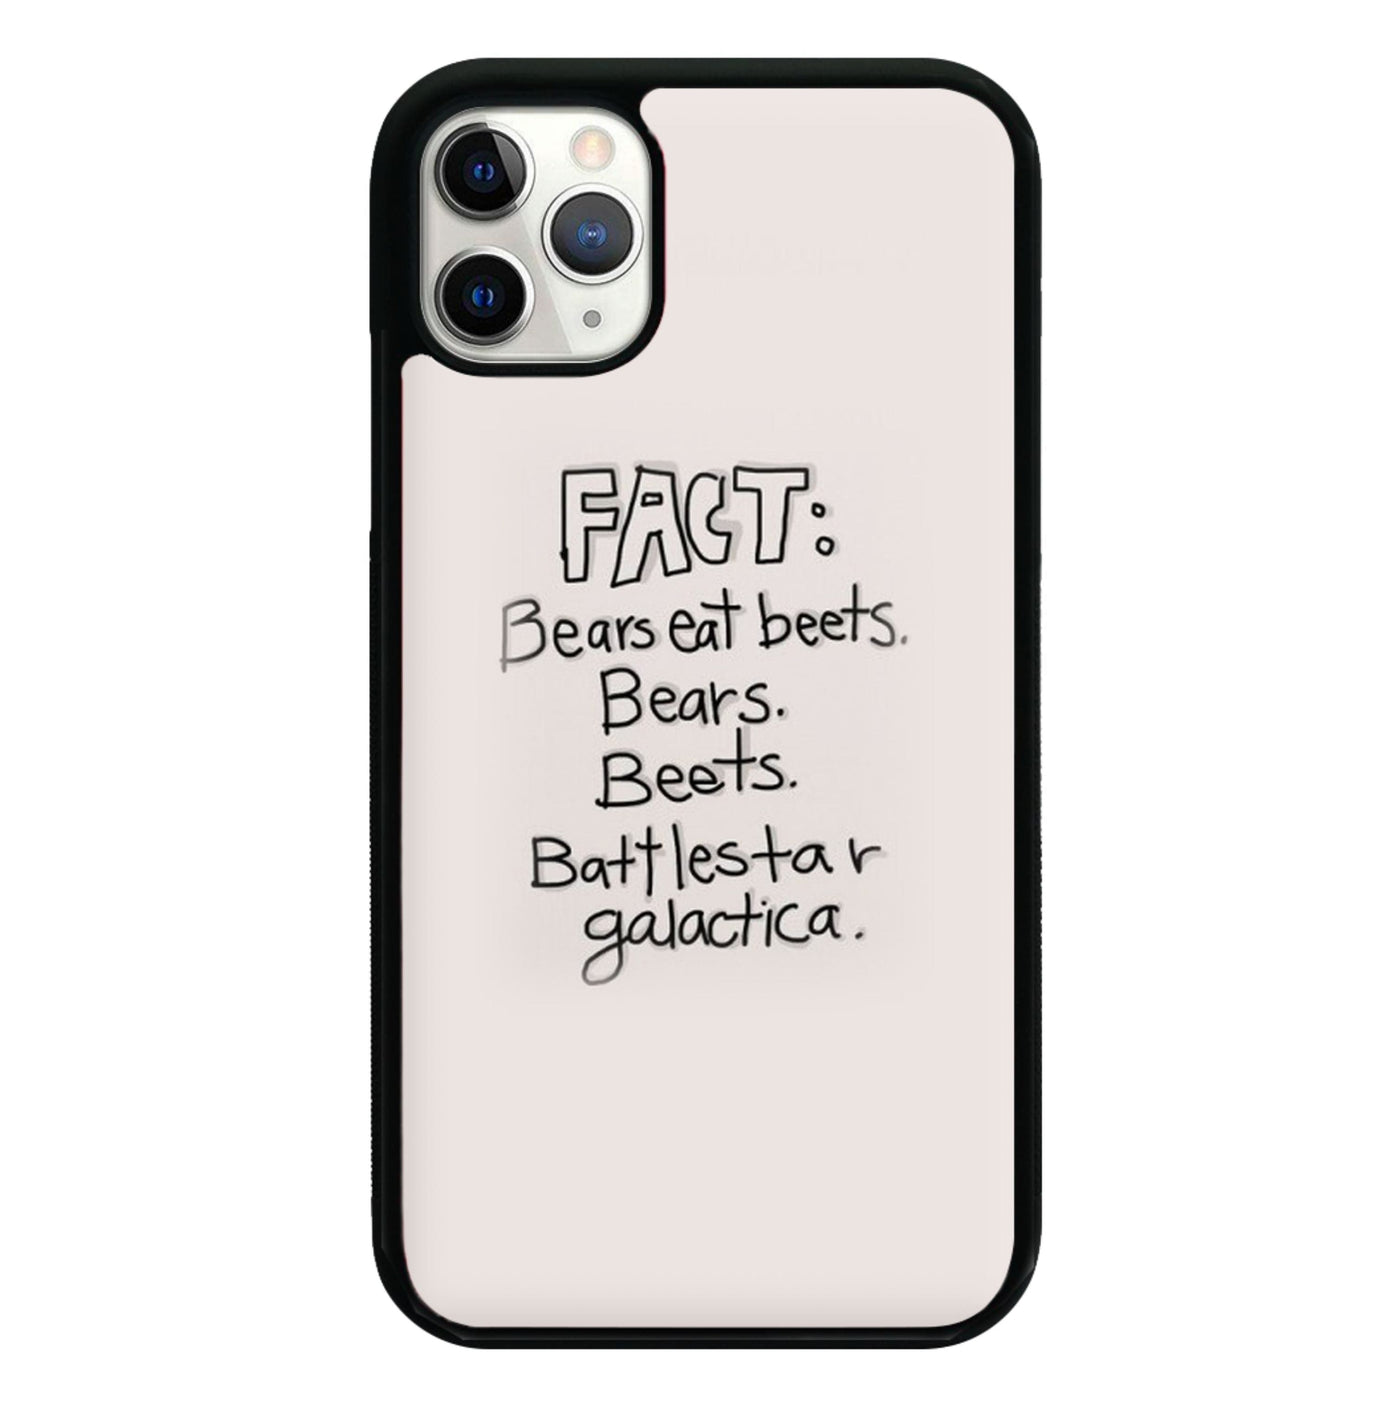 Fact - Bears Eat Beets - Bears, Beets, Battlestar Galactica Phone Case